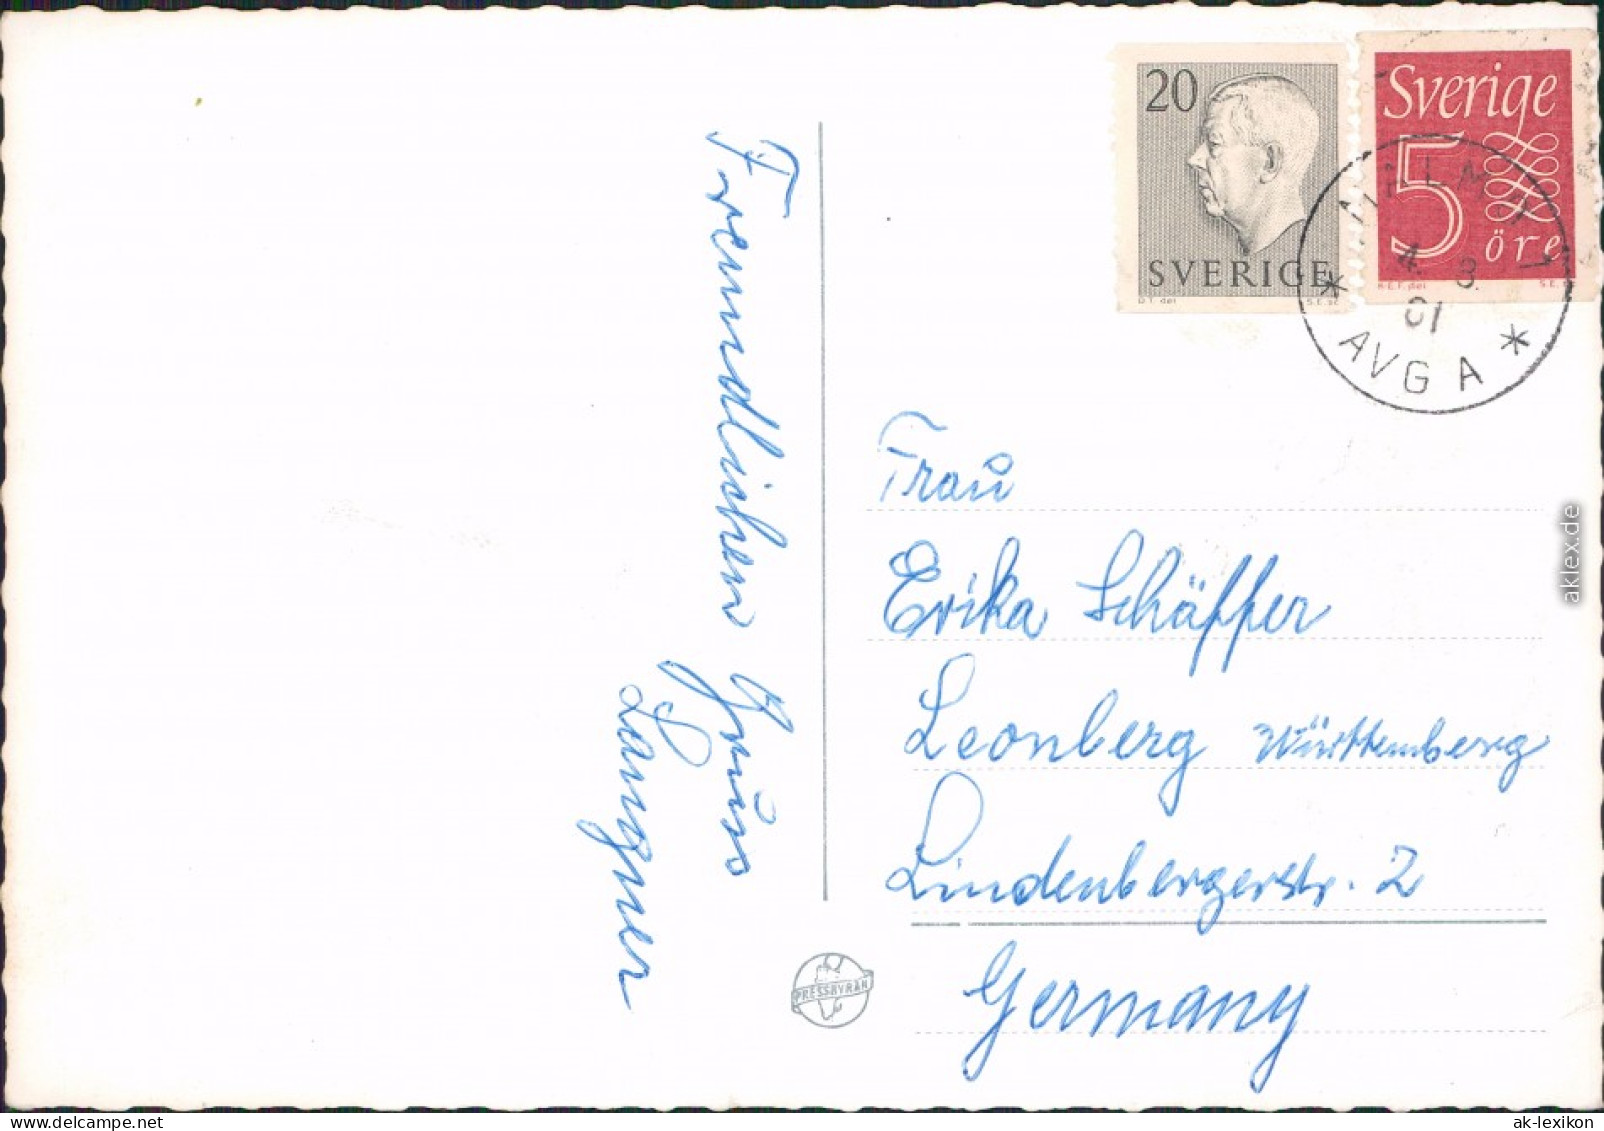 Postcard Malmö Motiv Fran Slottsparken 1964 - Suecia